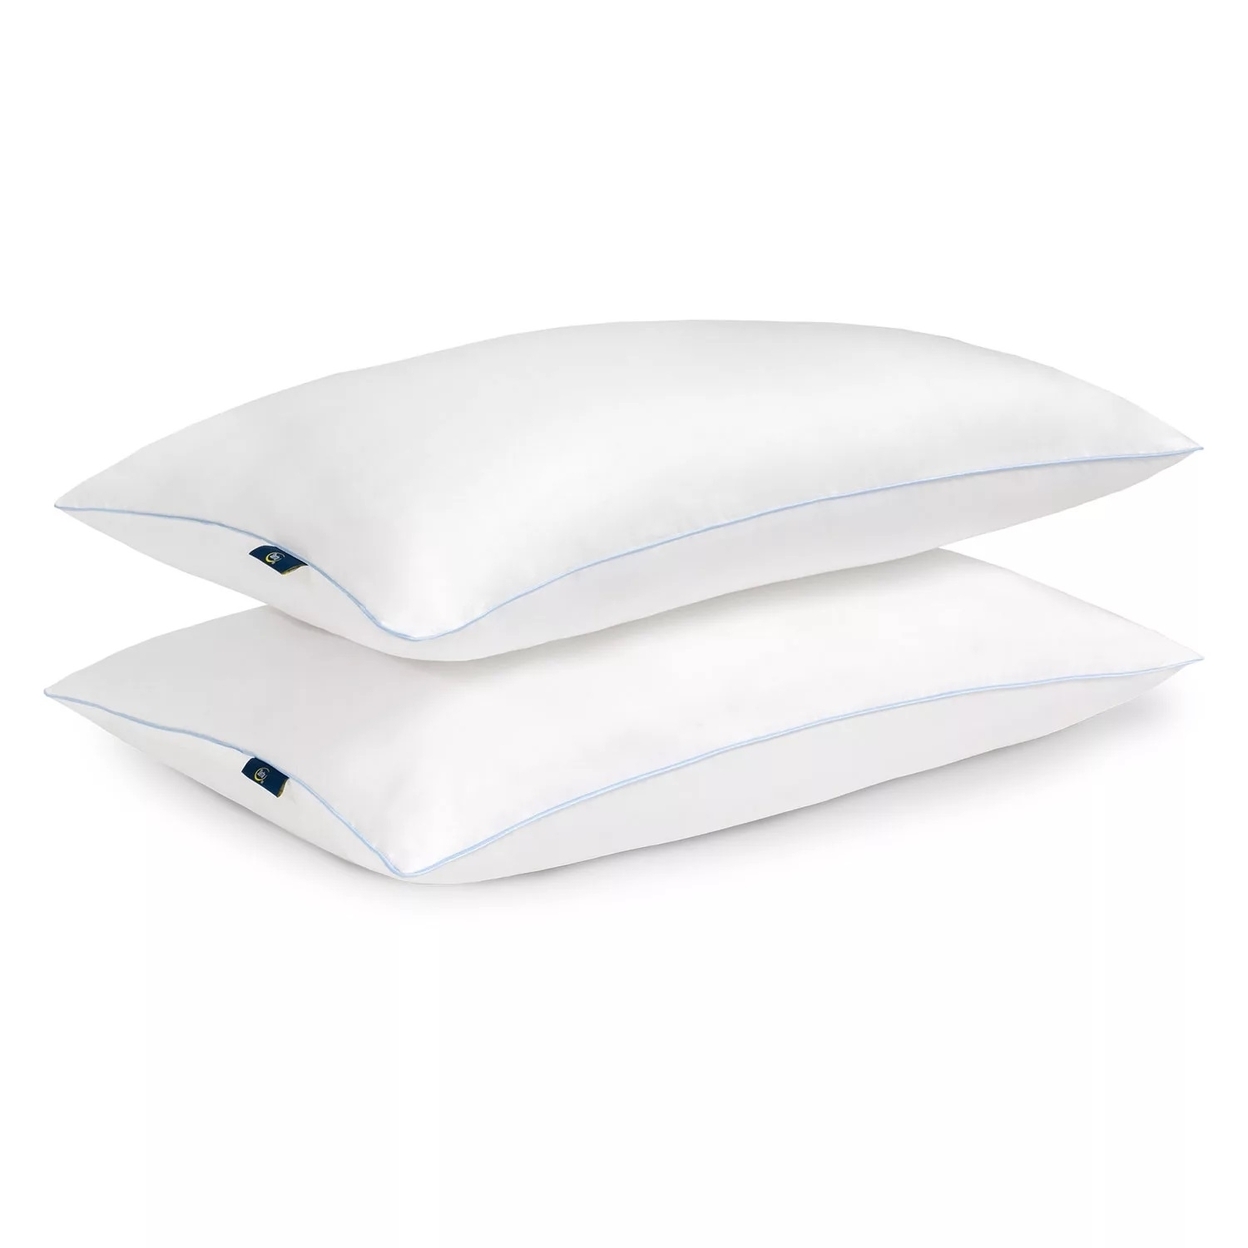 Serta Perfect Sleeper Comfy Sleep Eco-Friendly Bed Pillow, Standard/Queen (2 Pk)